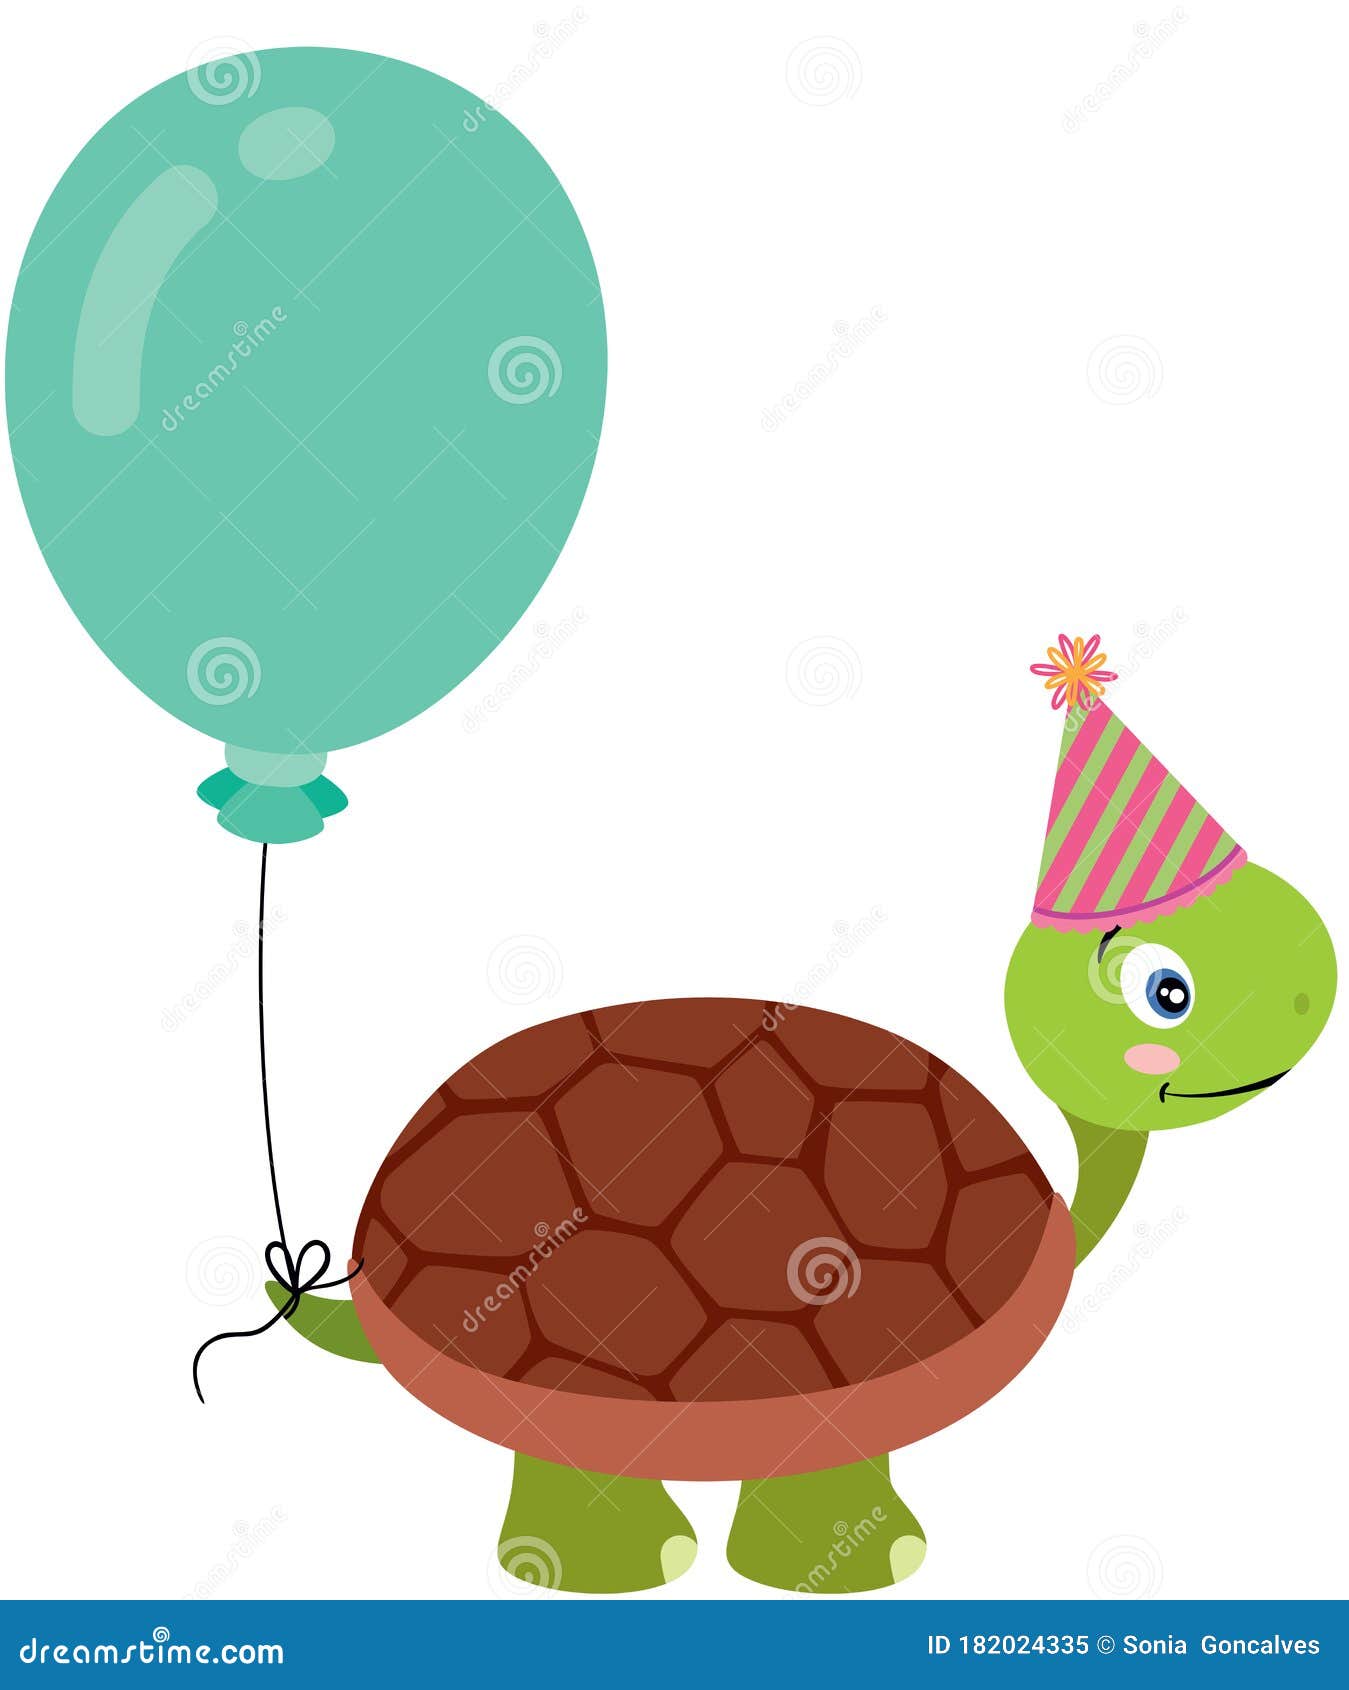 Balloon Turtle Fun Sticker